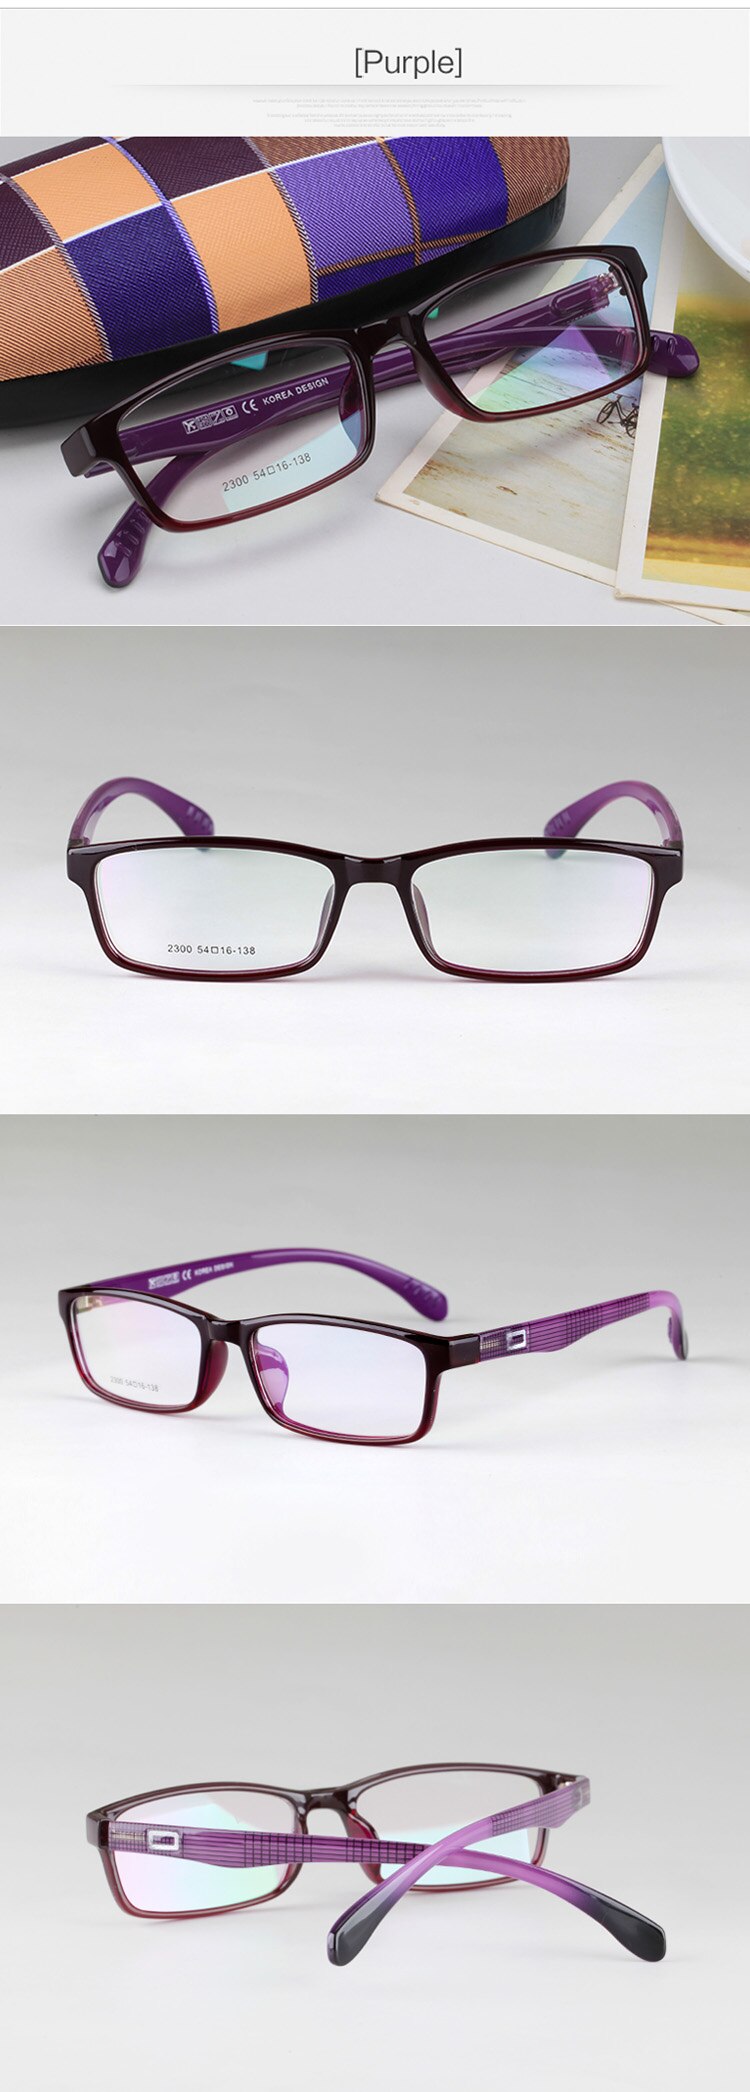 Hotochki Unisex Full Rim Square TR-90 Resin Frame Eyeglasses 2300 Full Rim Hotochki   